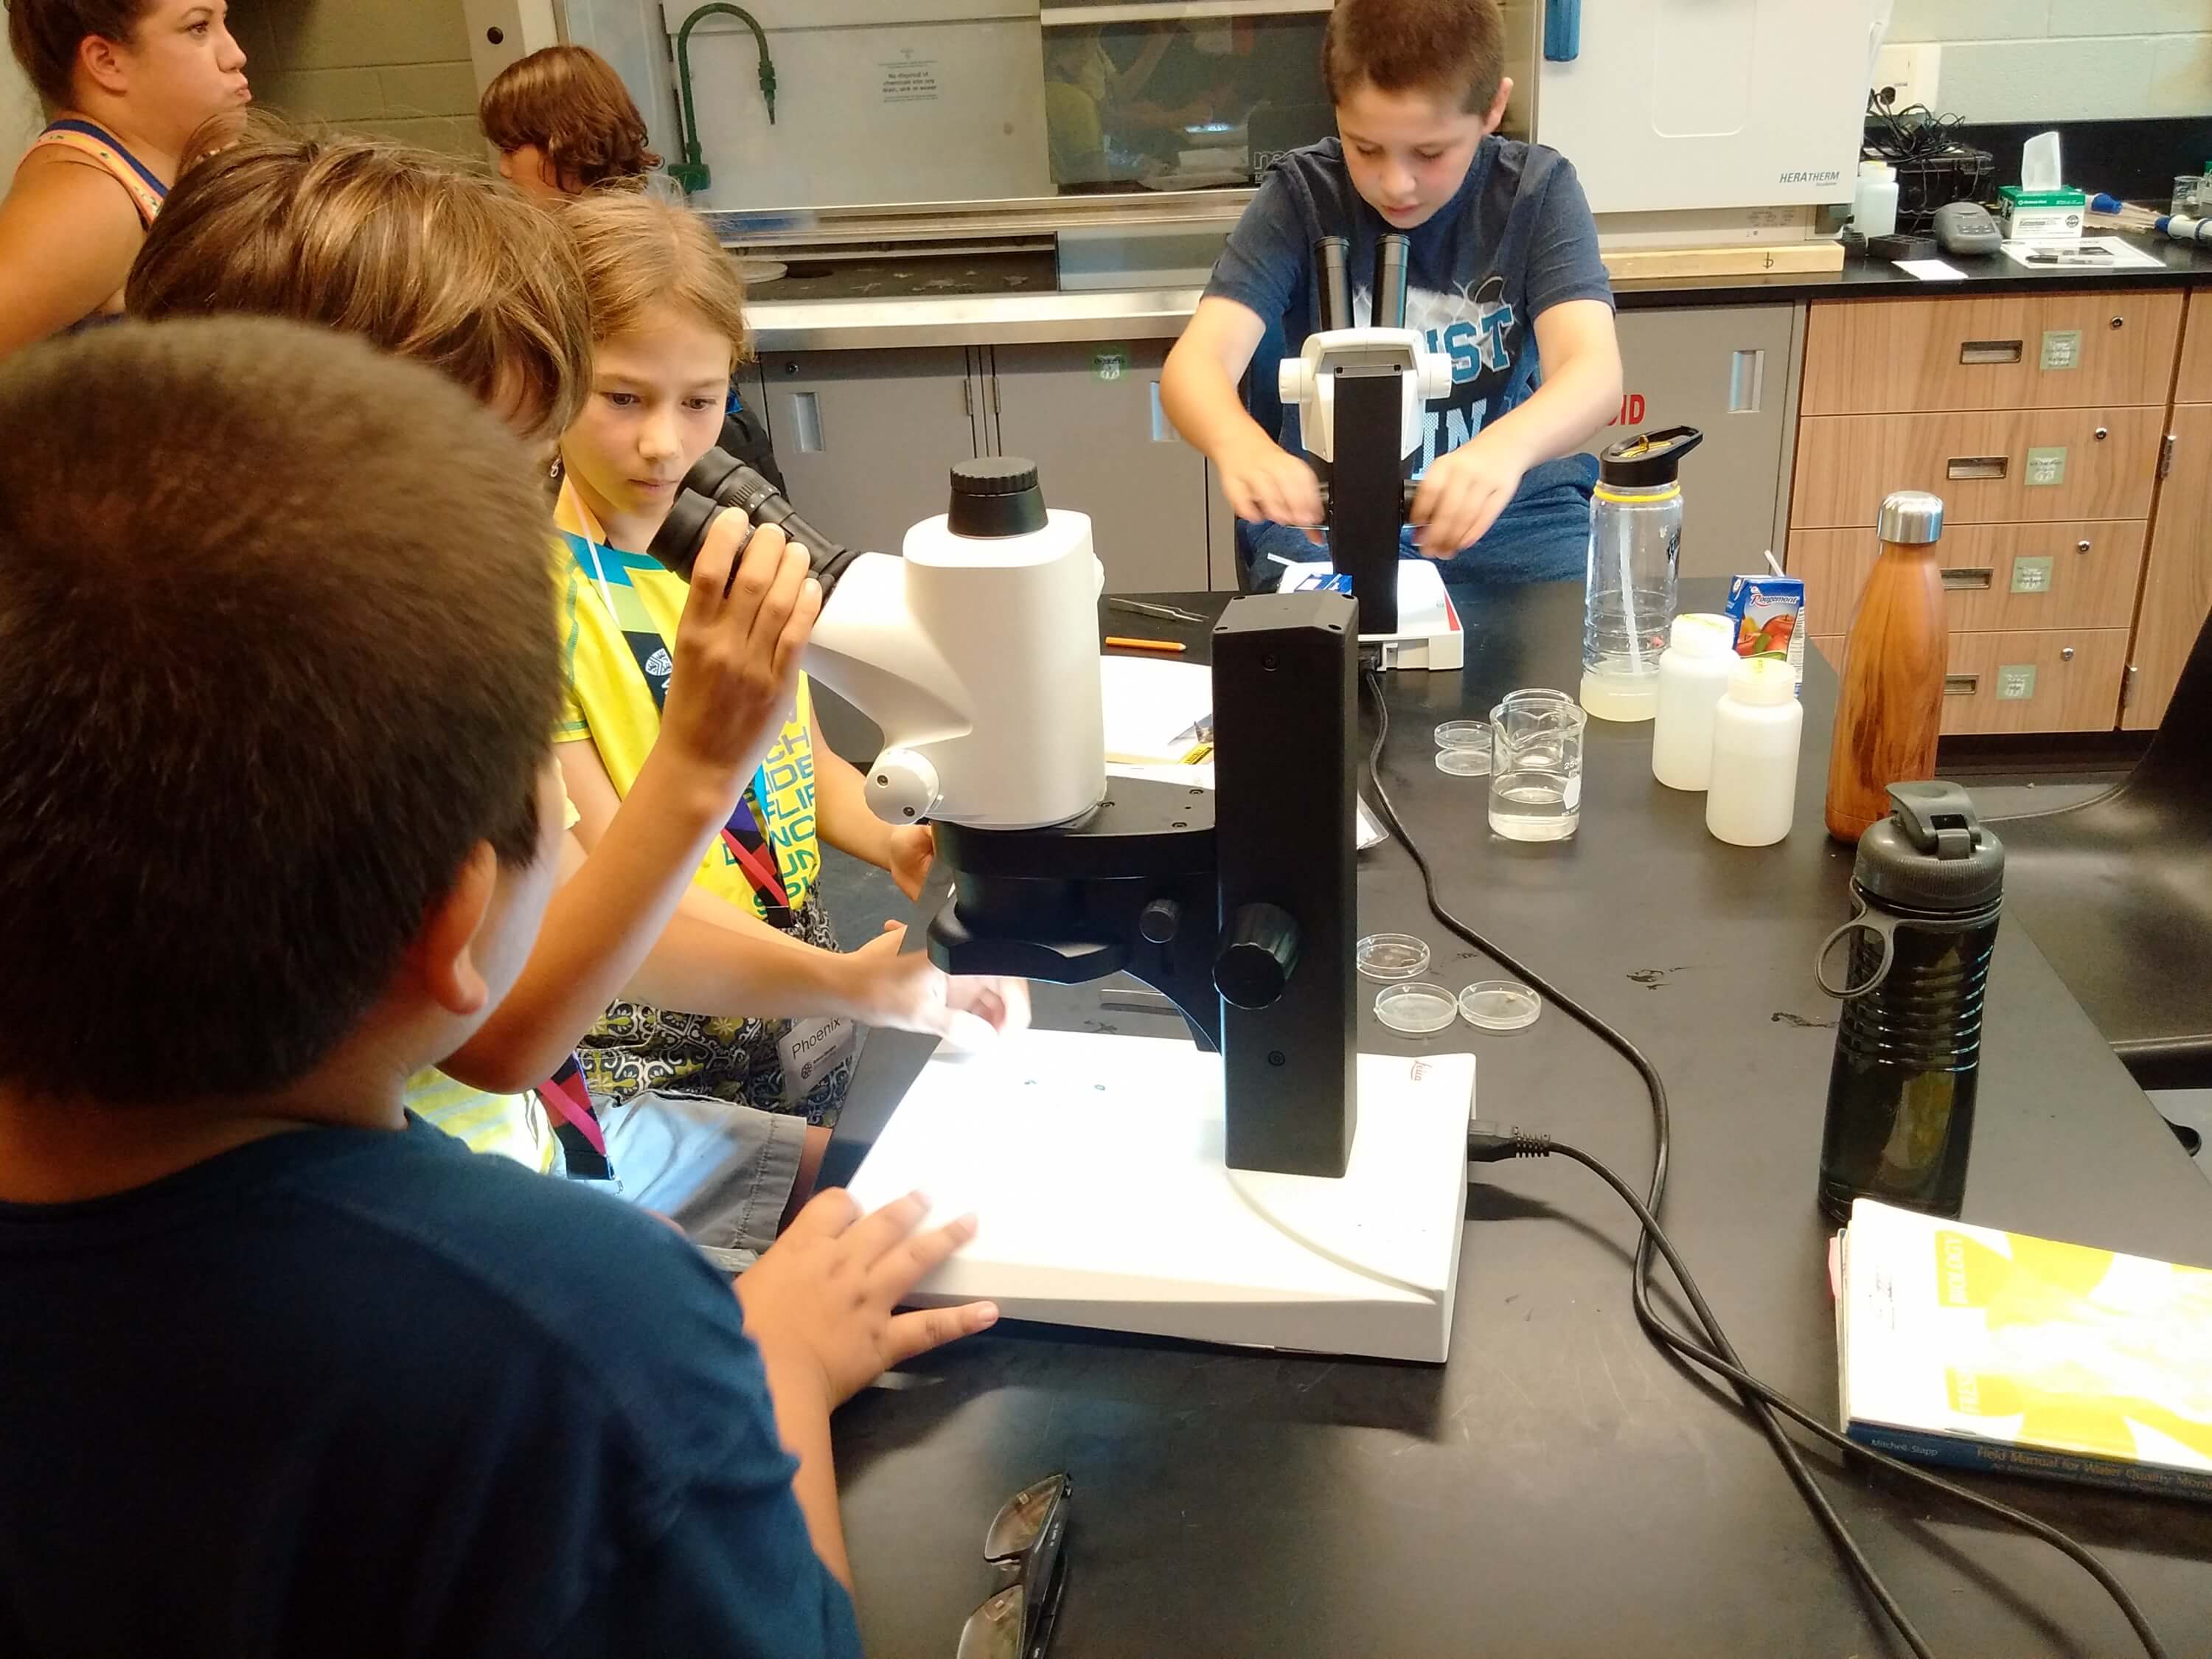 Students adjusting microscope